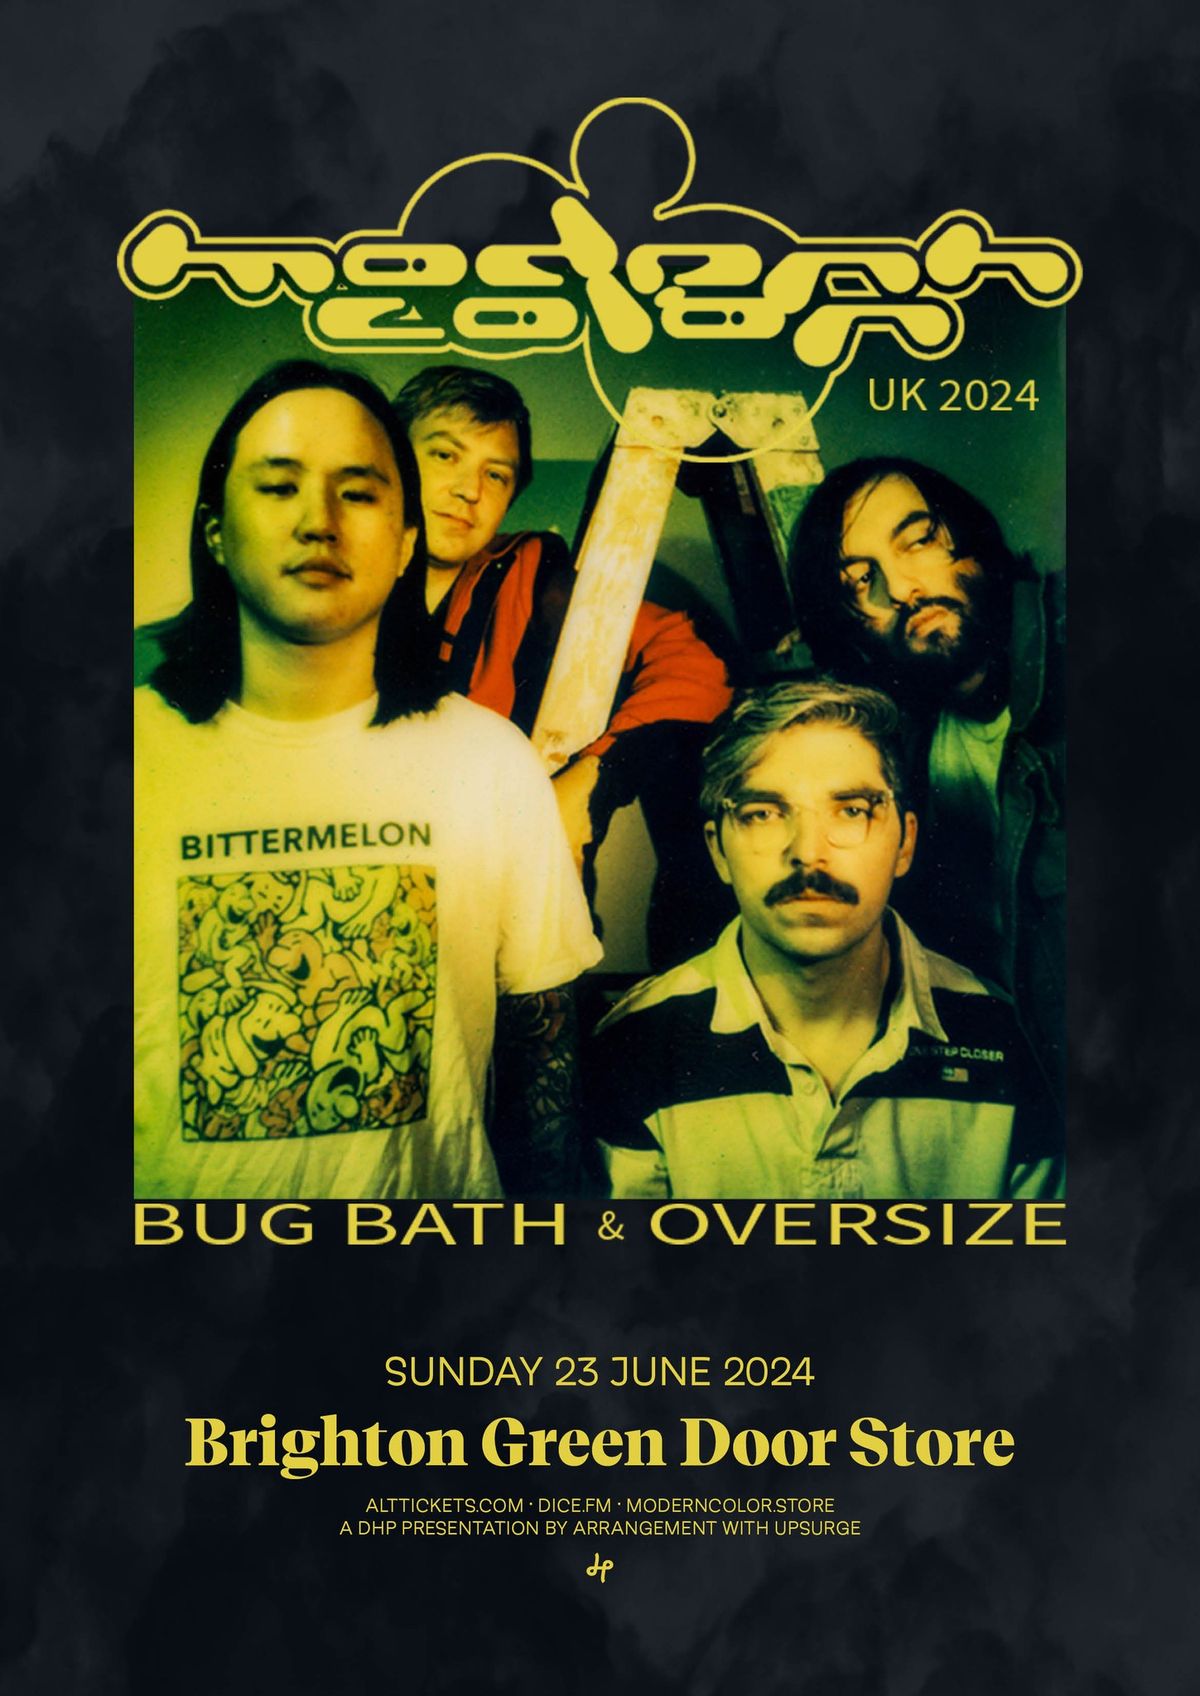 Modern Color, Bug Bath, Oversize live at Green Door Store, Brighton